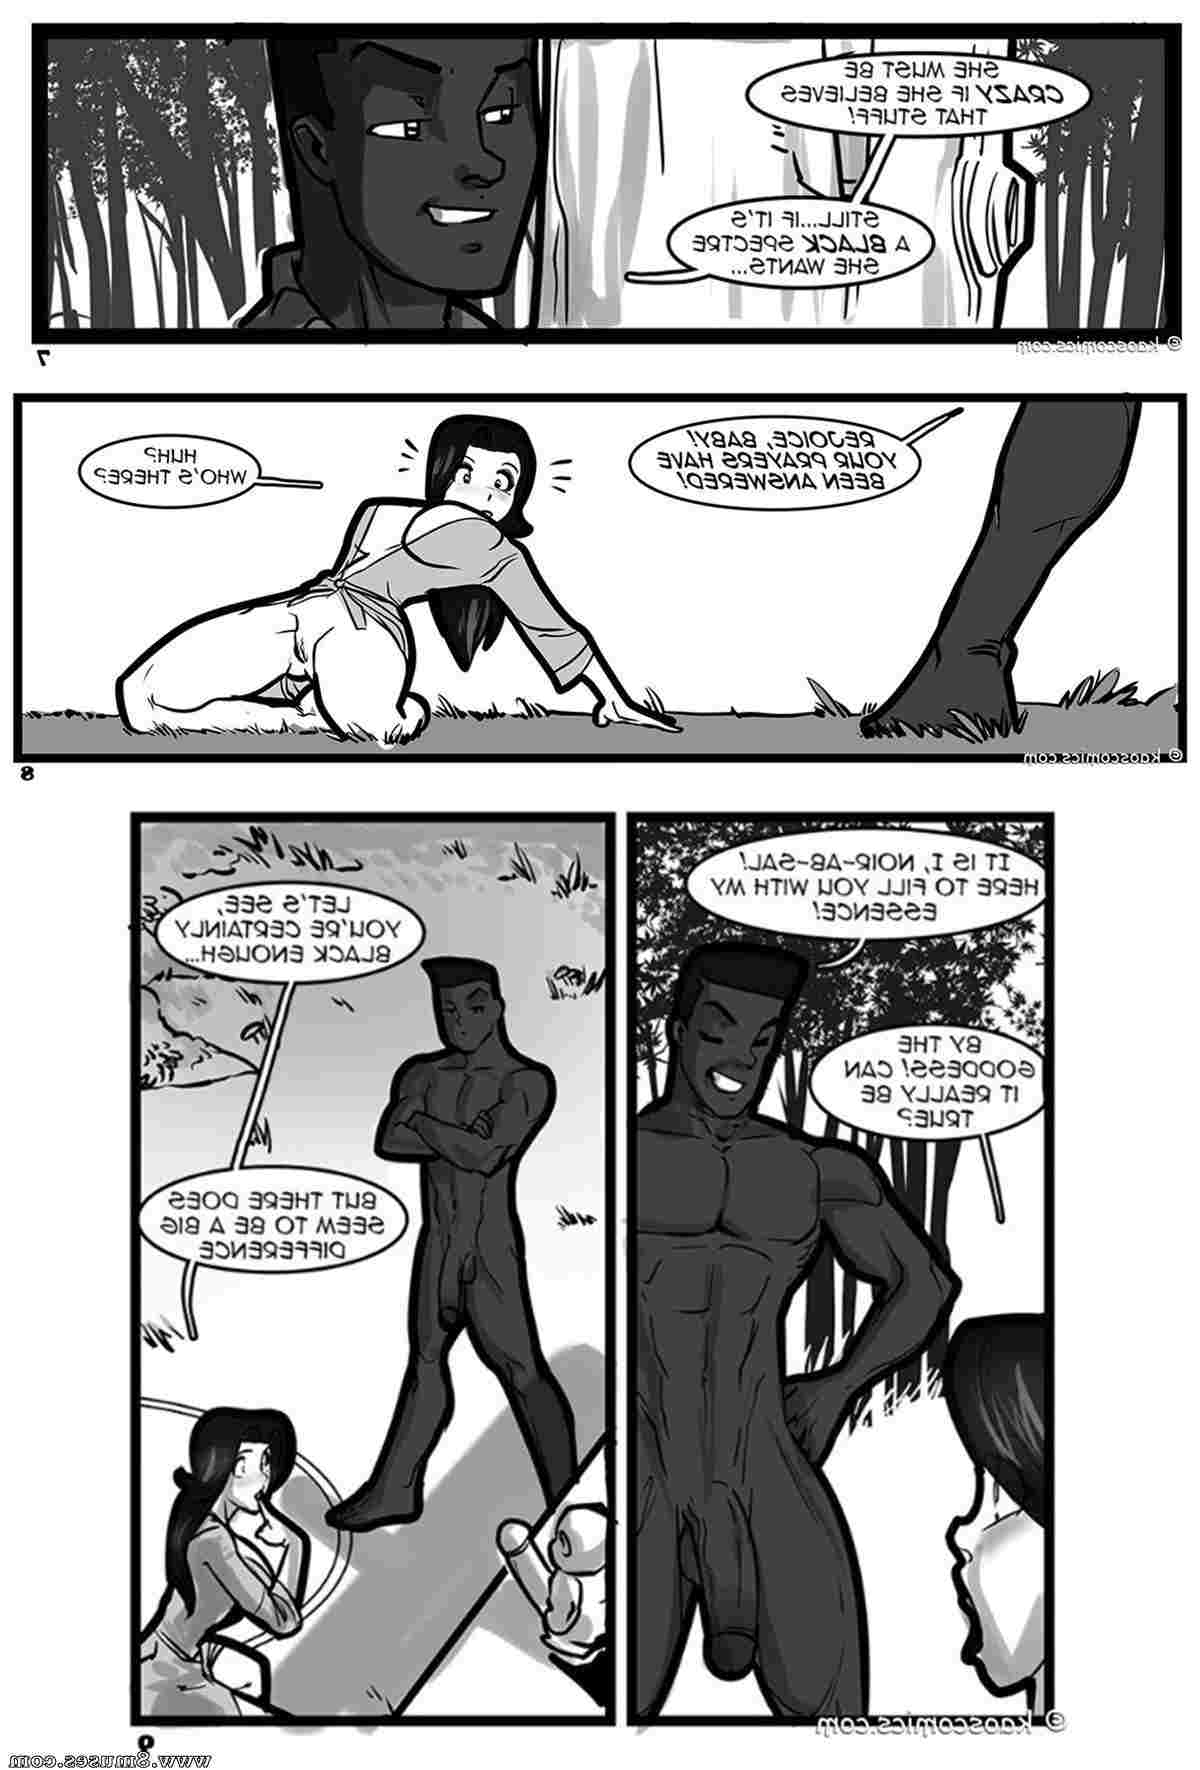 KAOS-Comics/Black-Magic Black_Magic__8muses_-_Sex_and_Porn_Comics_4.jpg